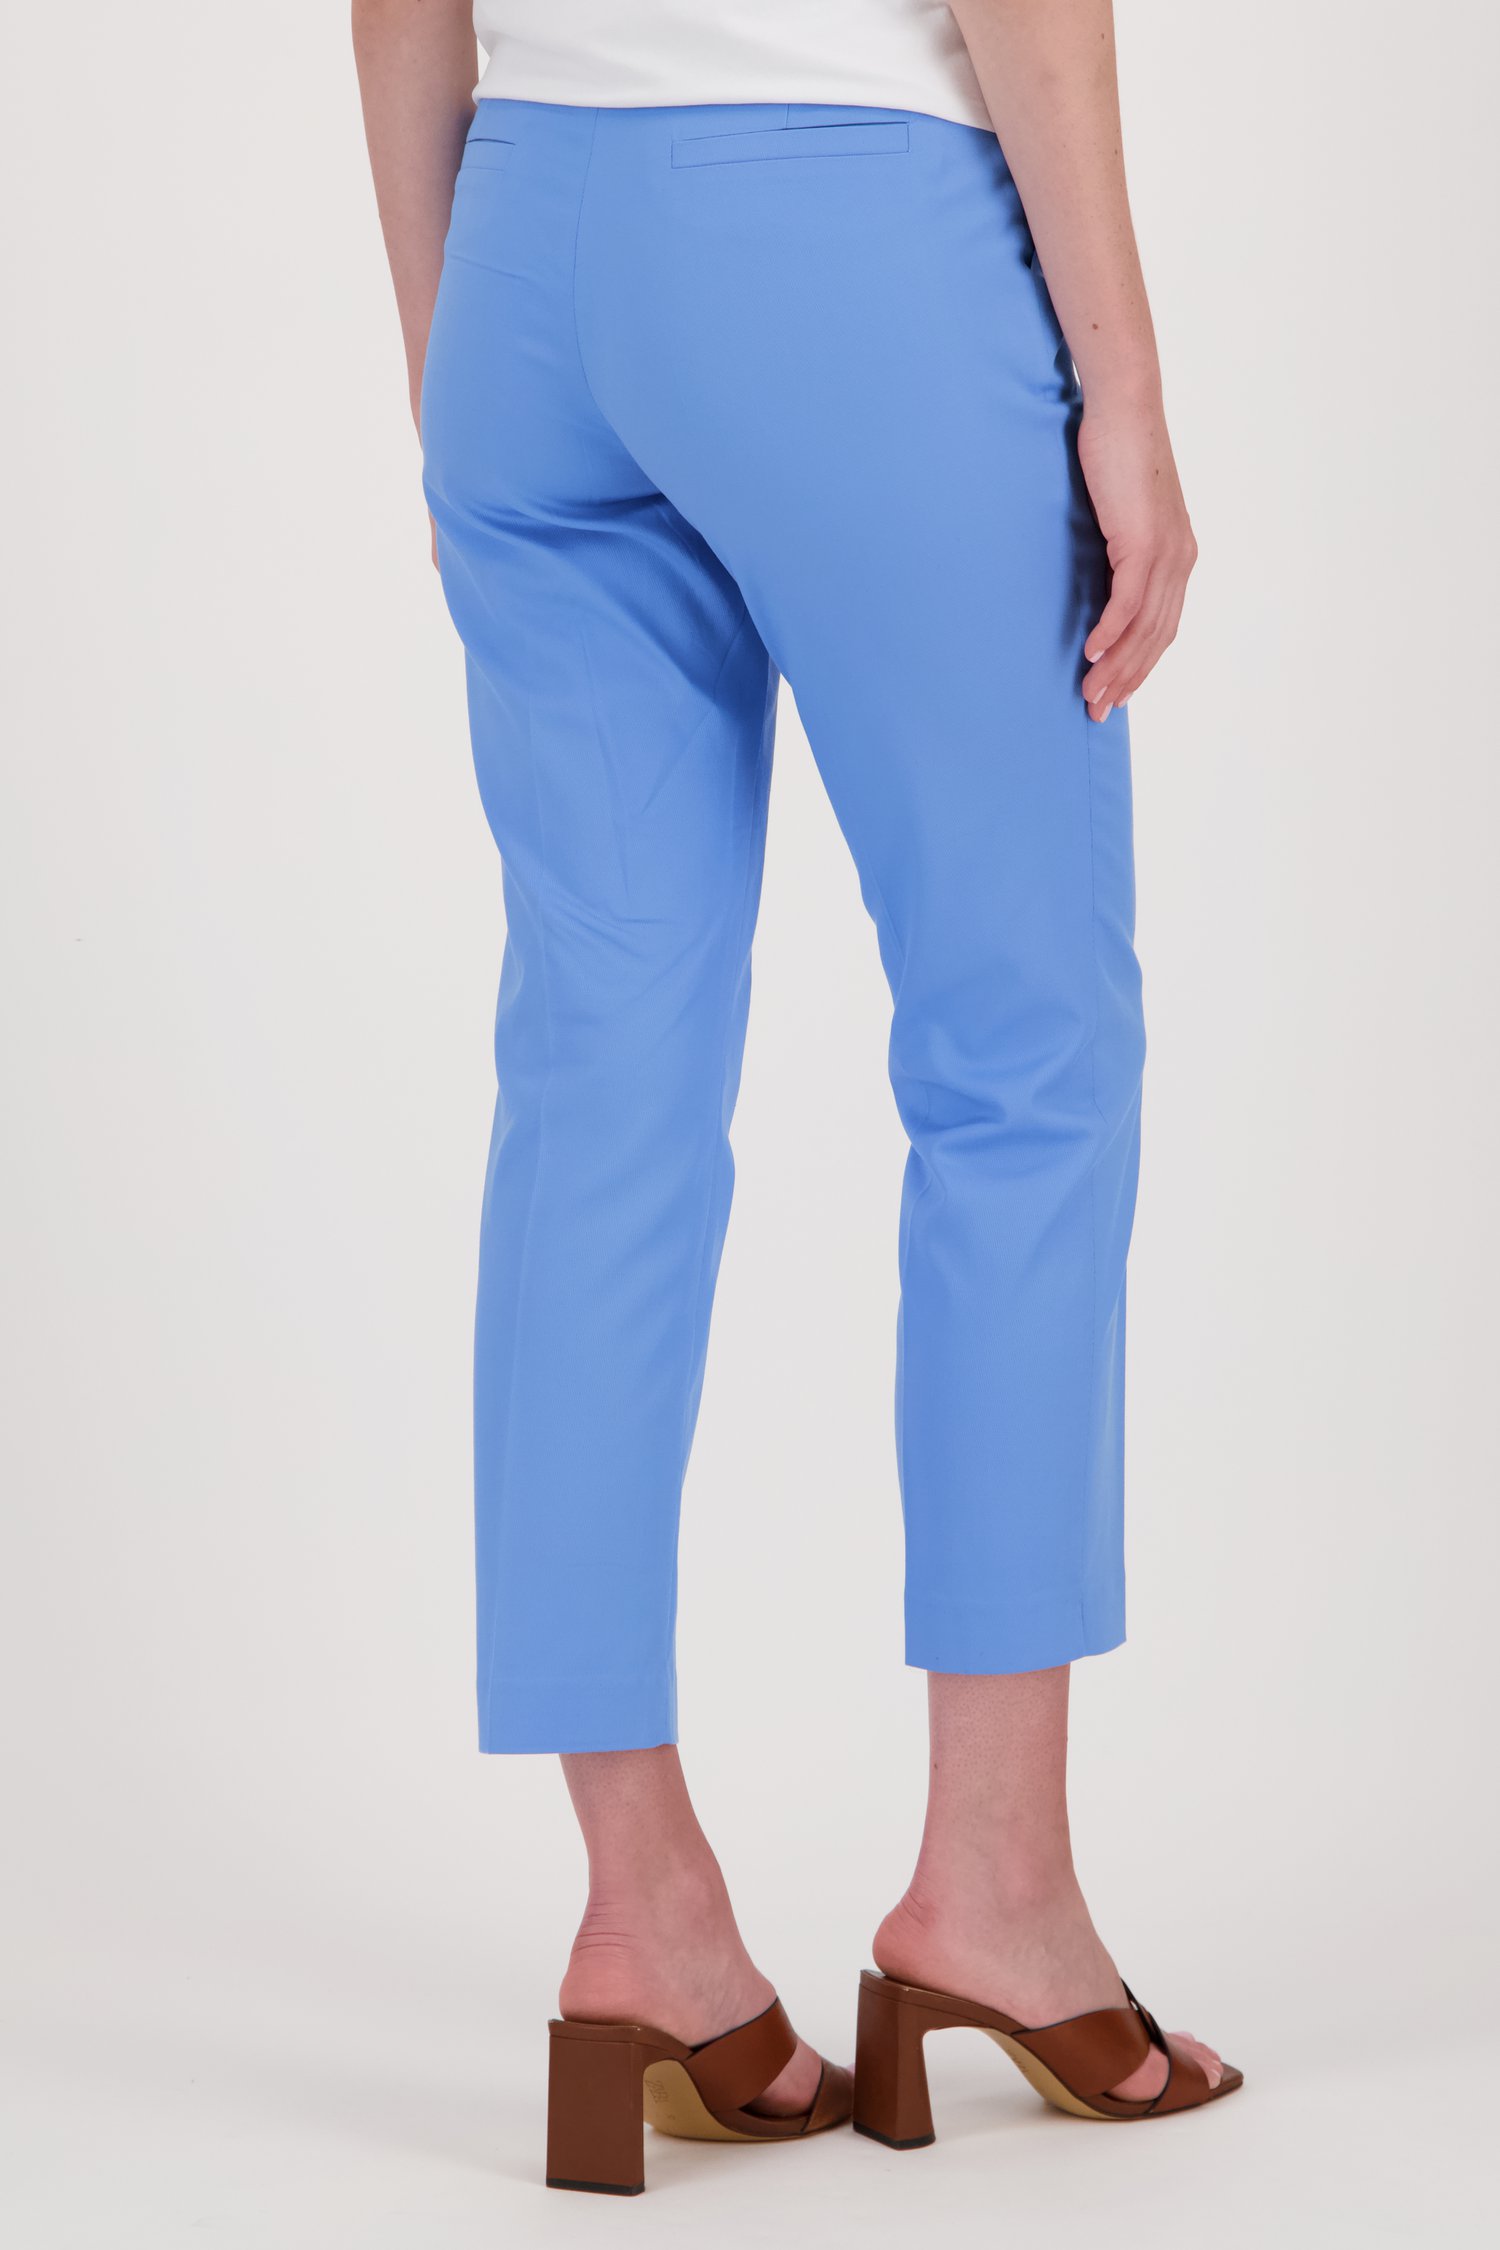 Blauwe geklede broek - 7/8 lengte van More & More voor Dames